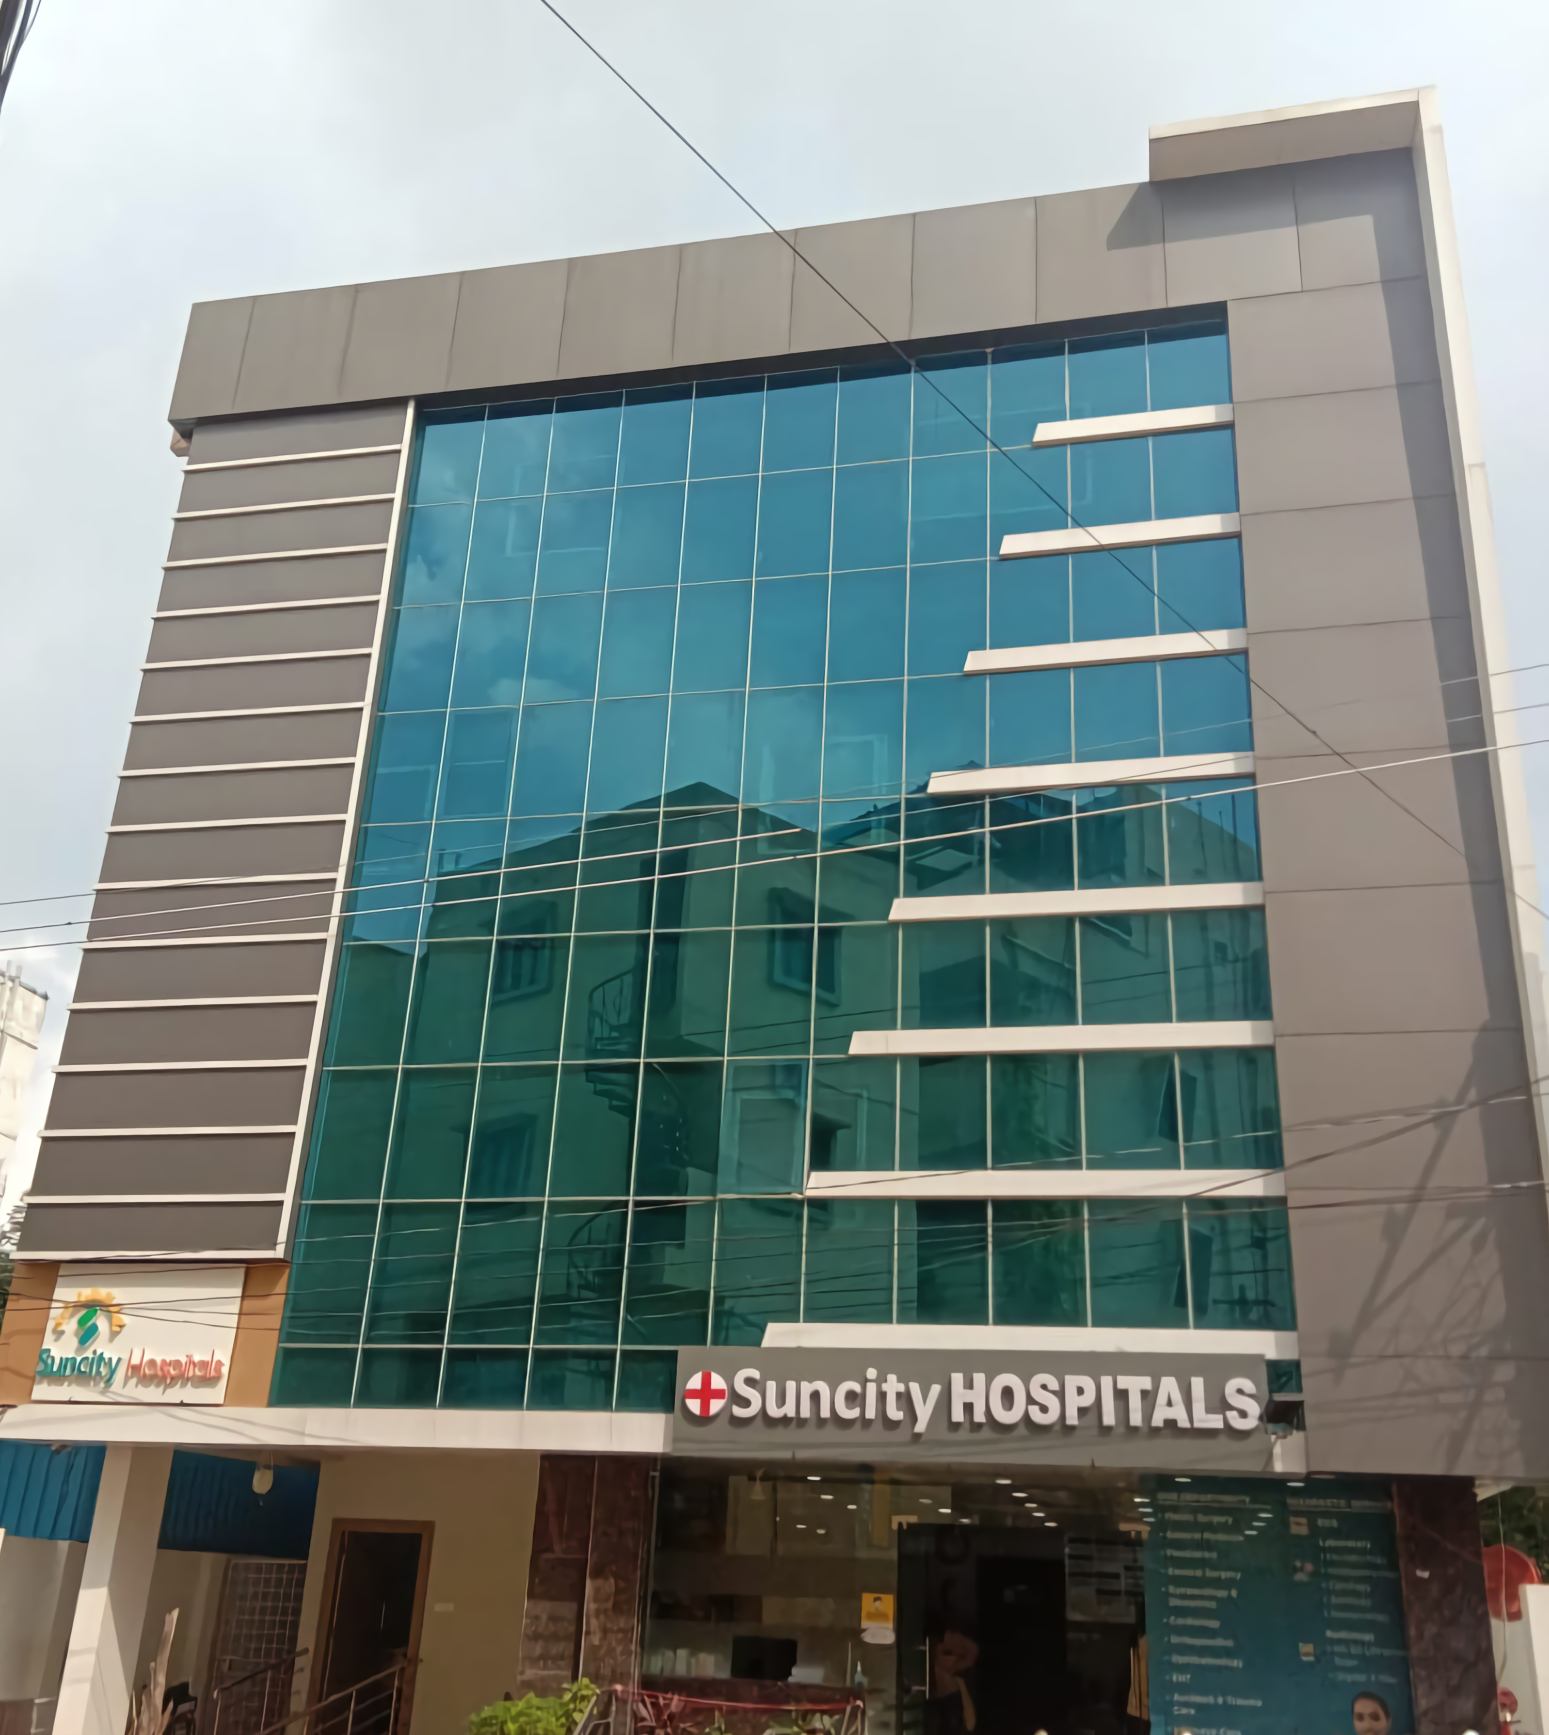 Suncity Hospitals